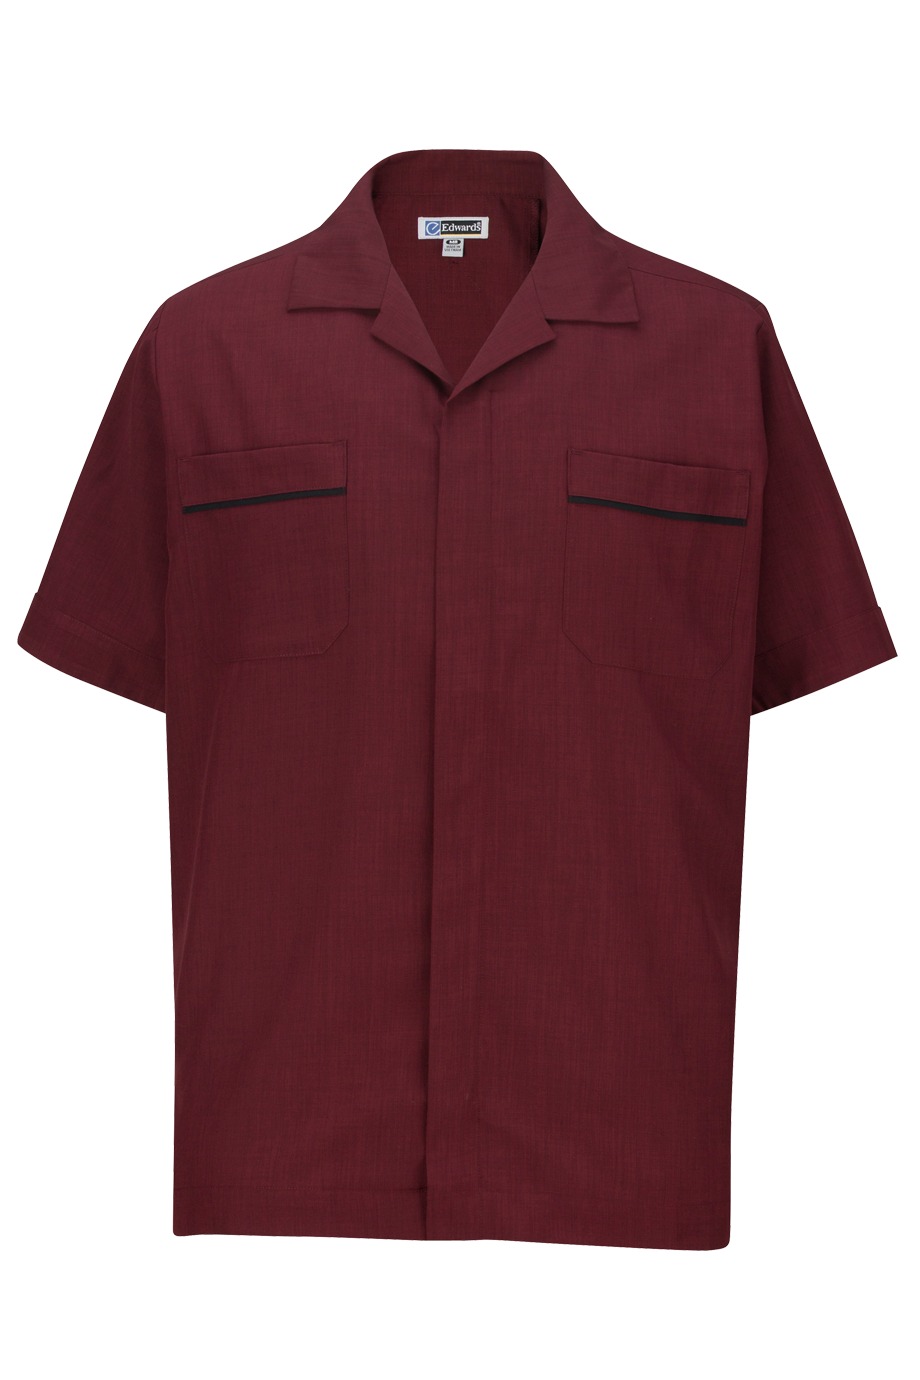 Edwards Garment 4280 - Pinnacle Service Shirt